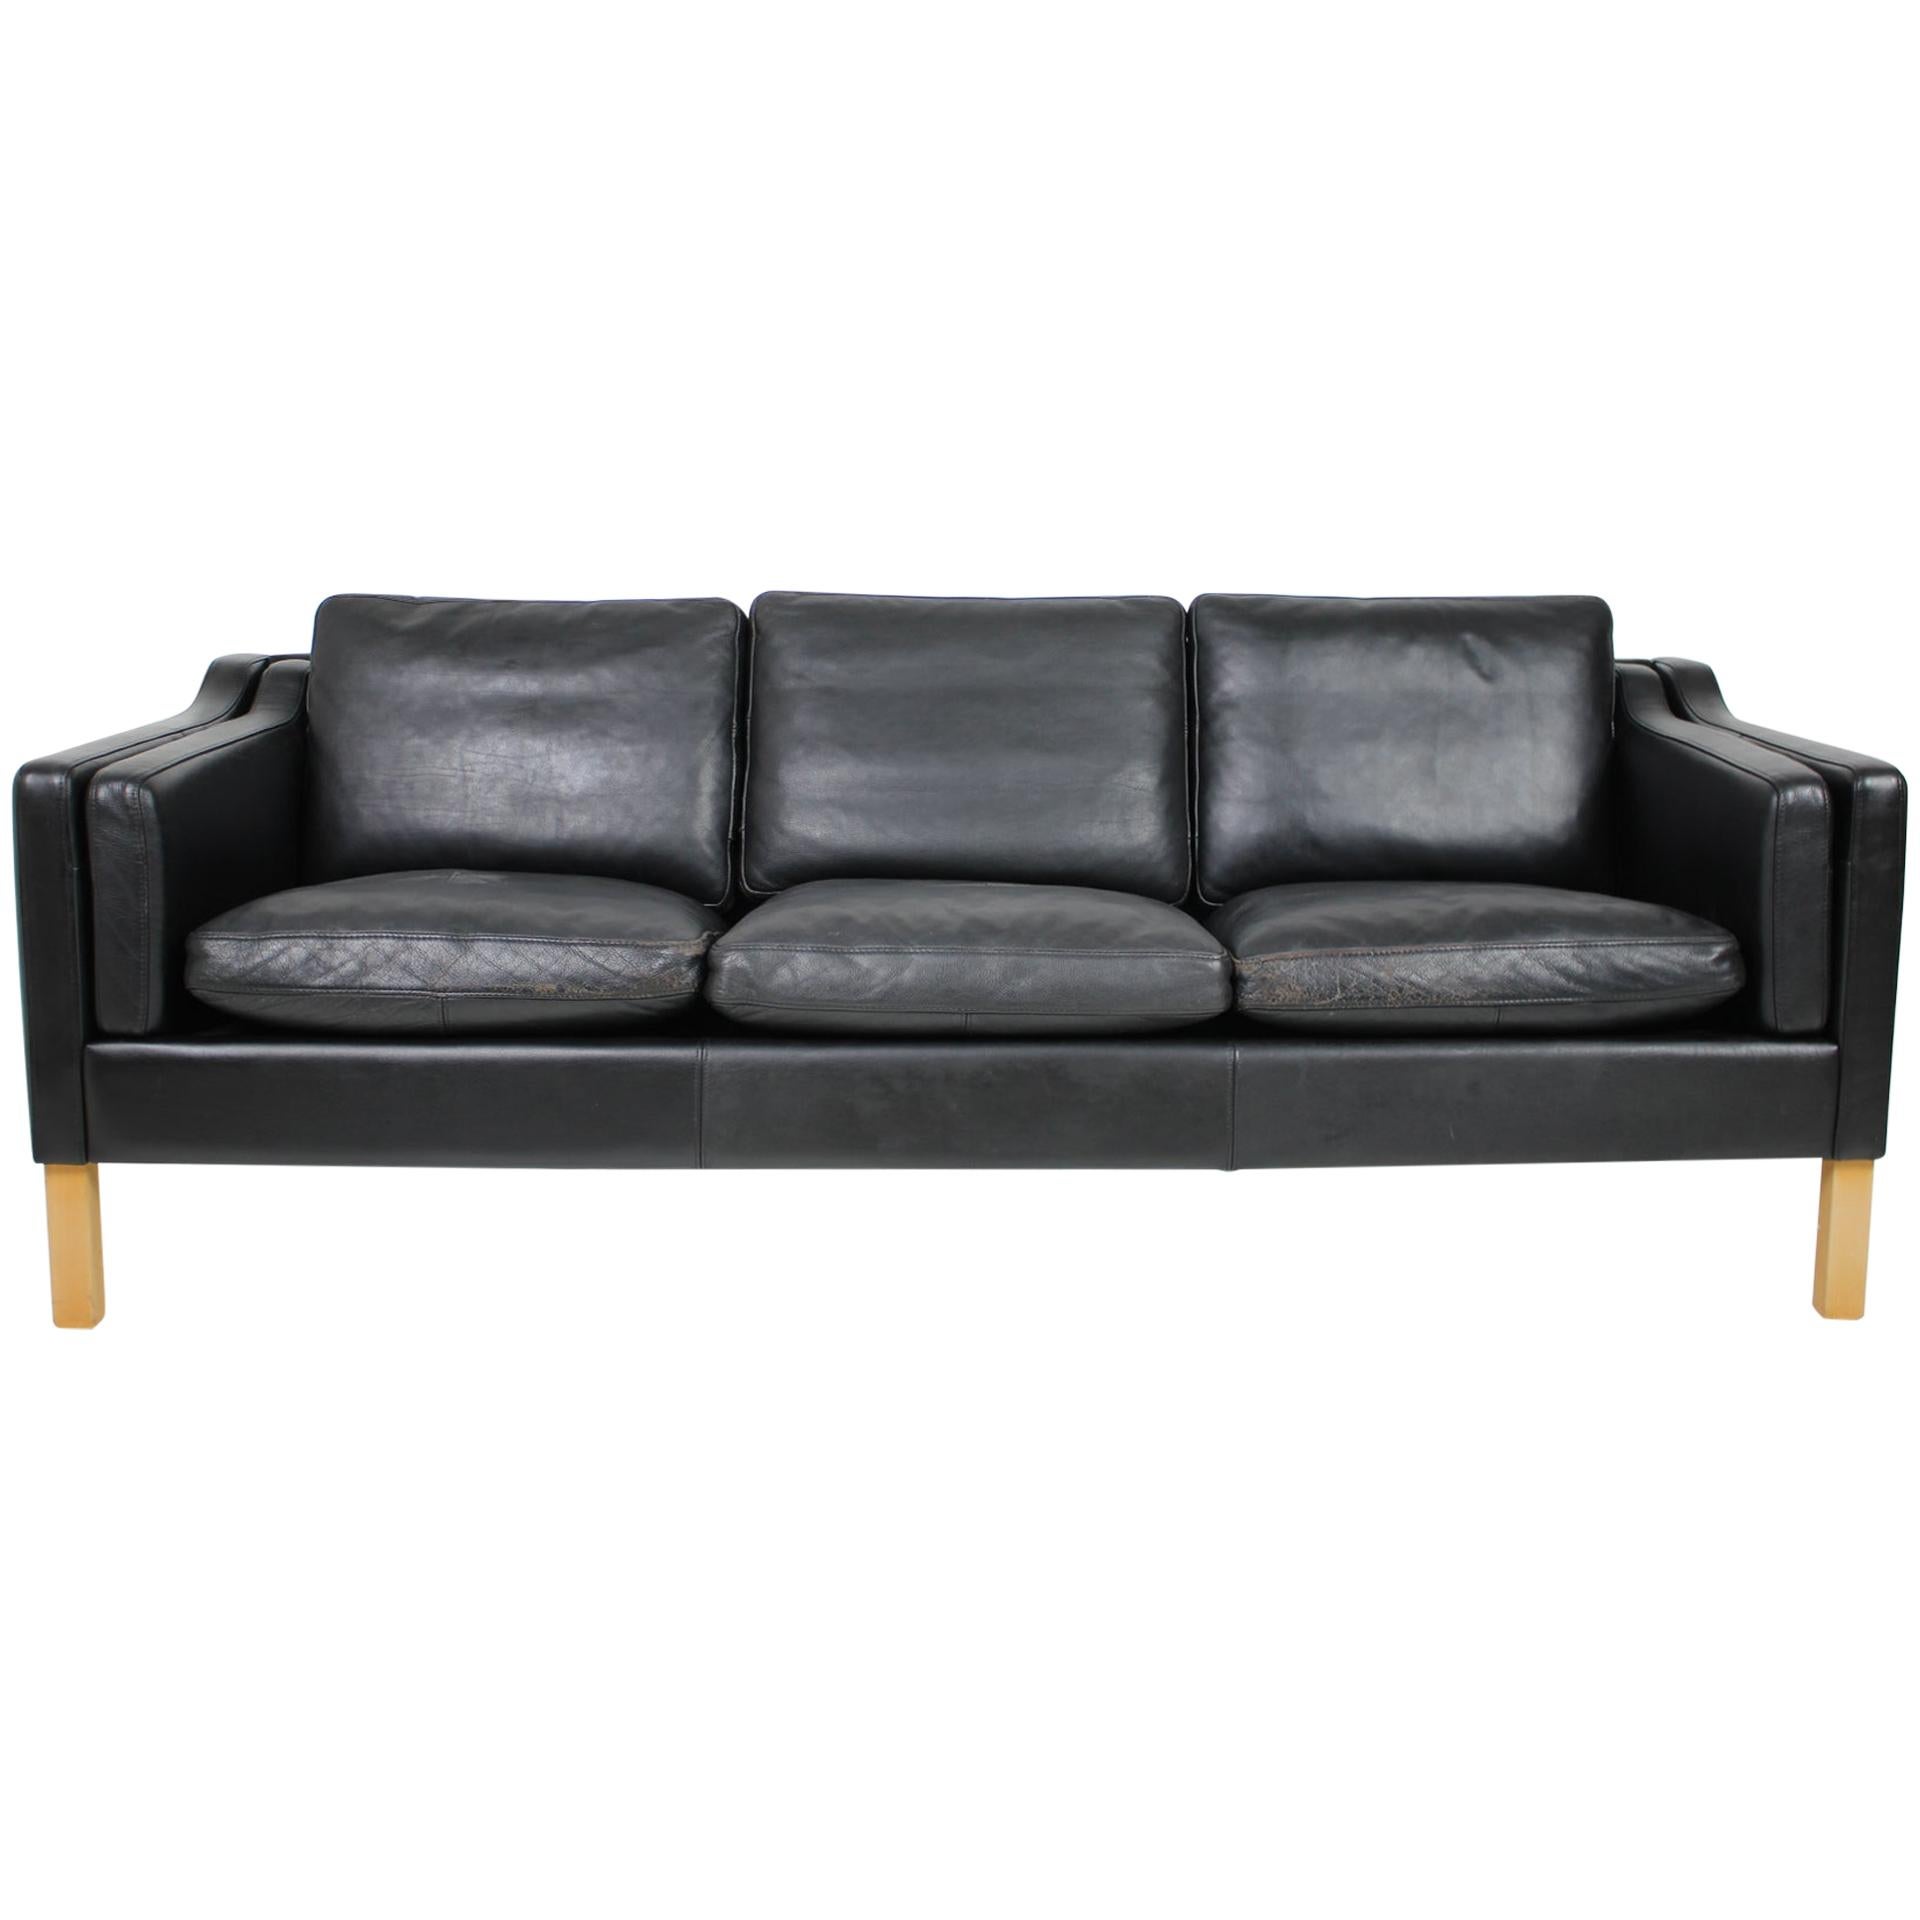 1960s Danish Black Leather 3-Seat Sofa